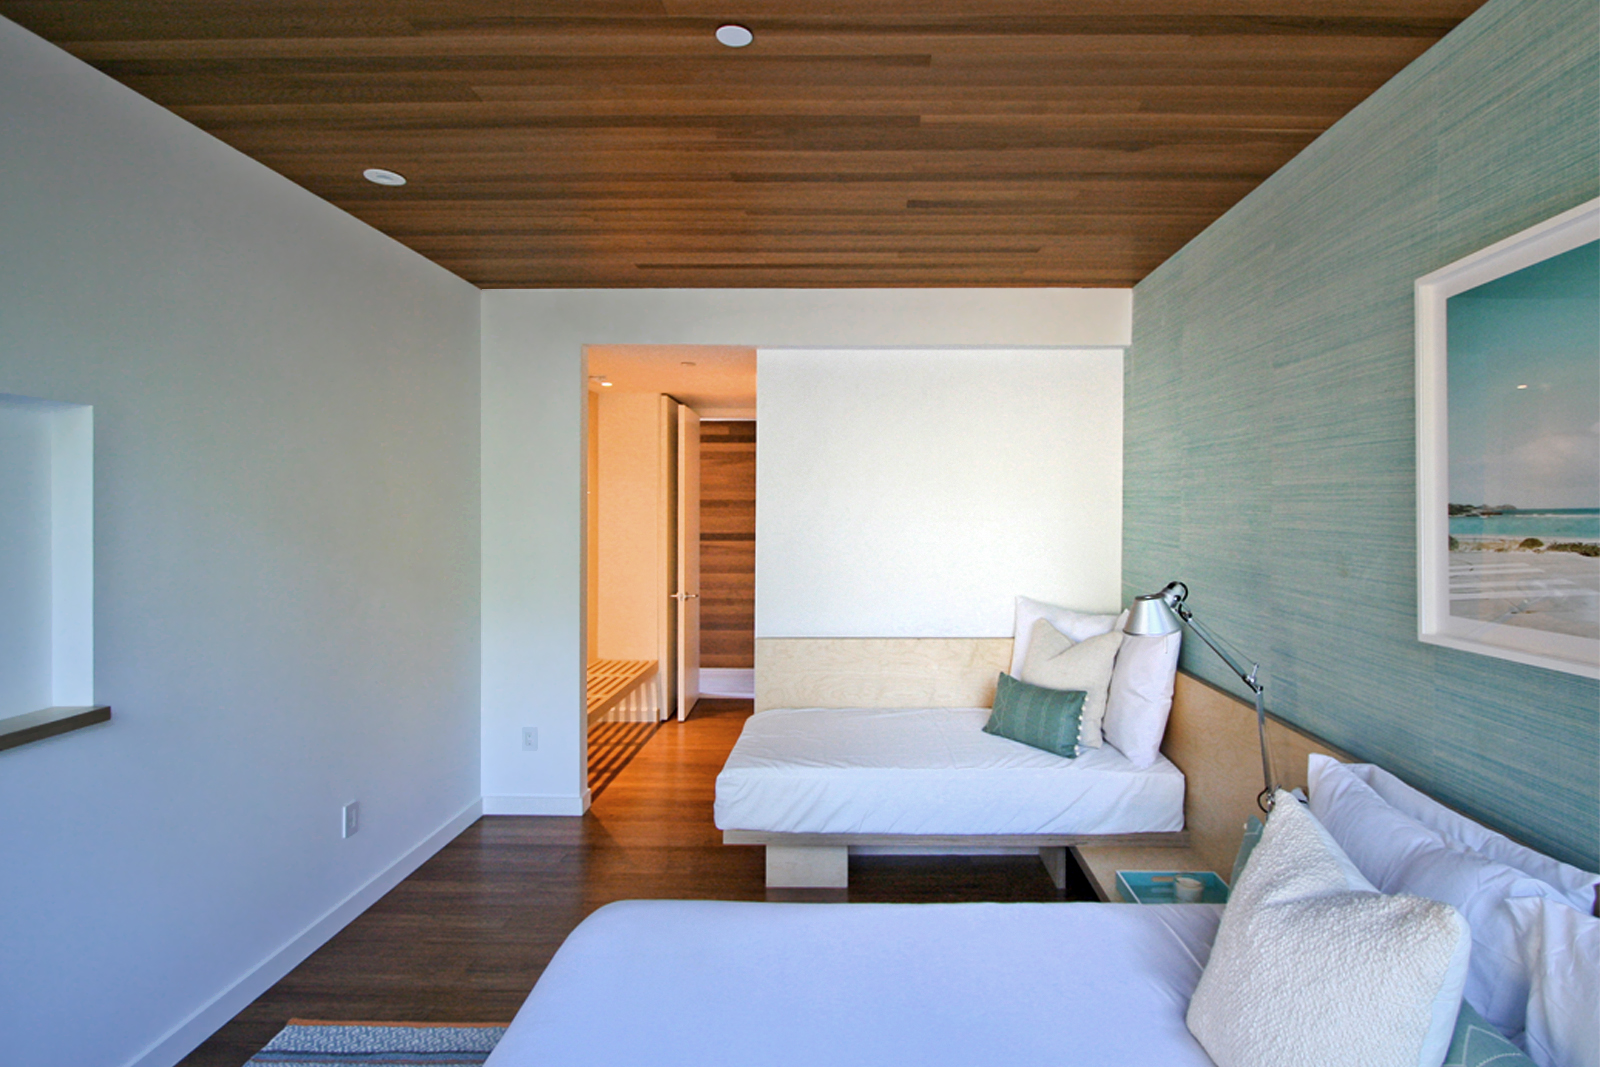 res4-resolution-4-architecture-modern-modular-house-prefab-amagansett-addition-bedroom-perspective-01.jpg